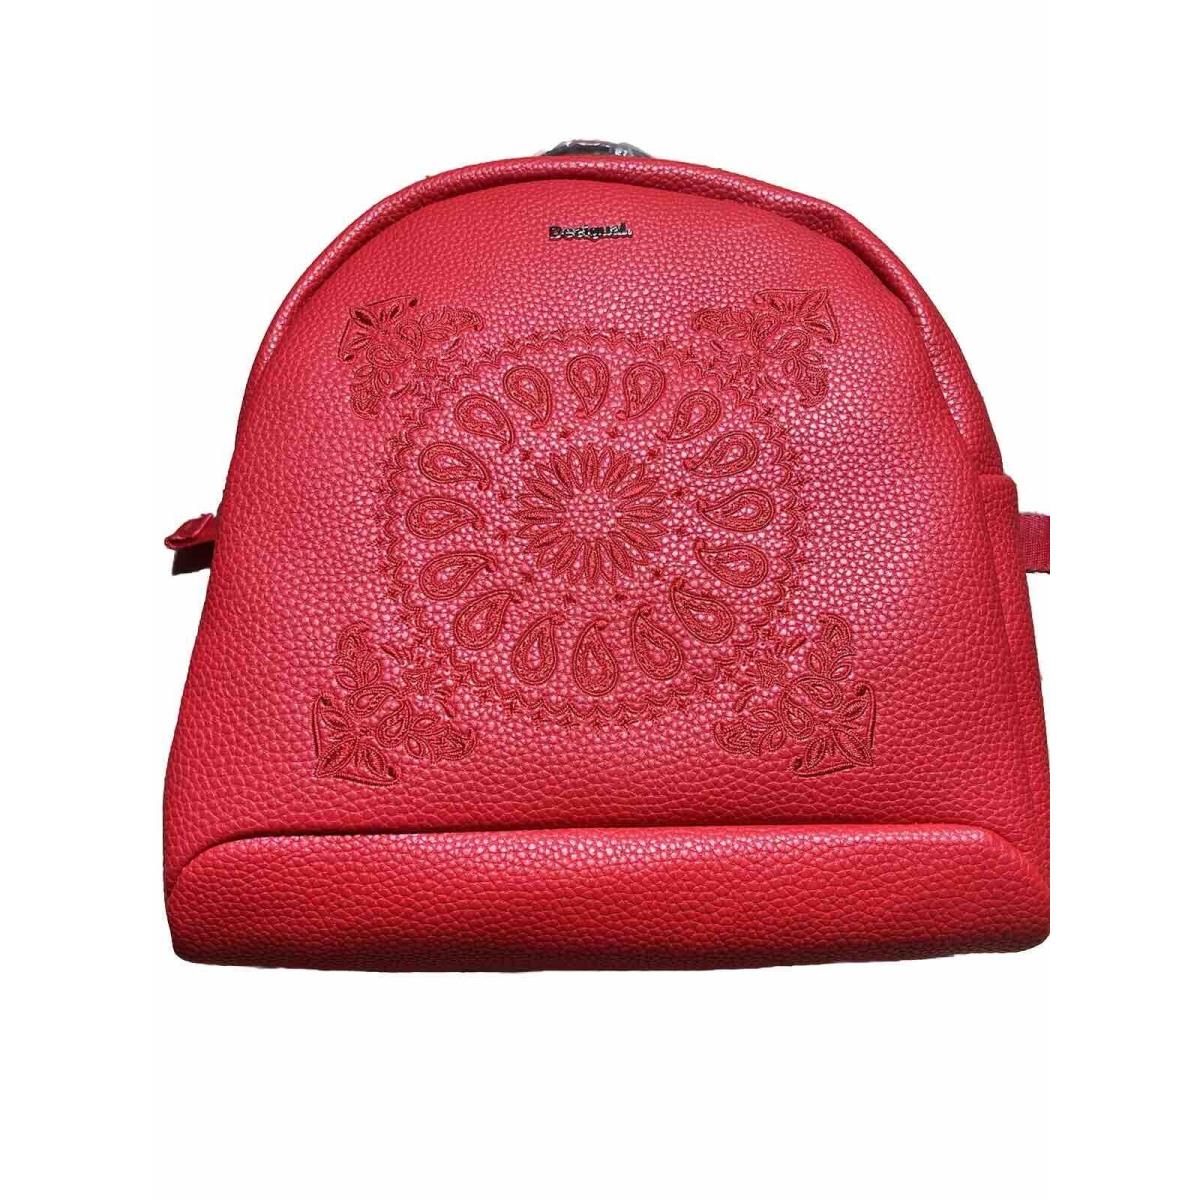 Desigual Backpack Travel Embroidered Black Red Soft Bandana Venice Purse Bag